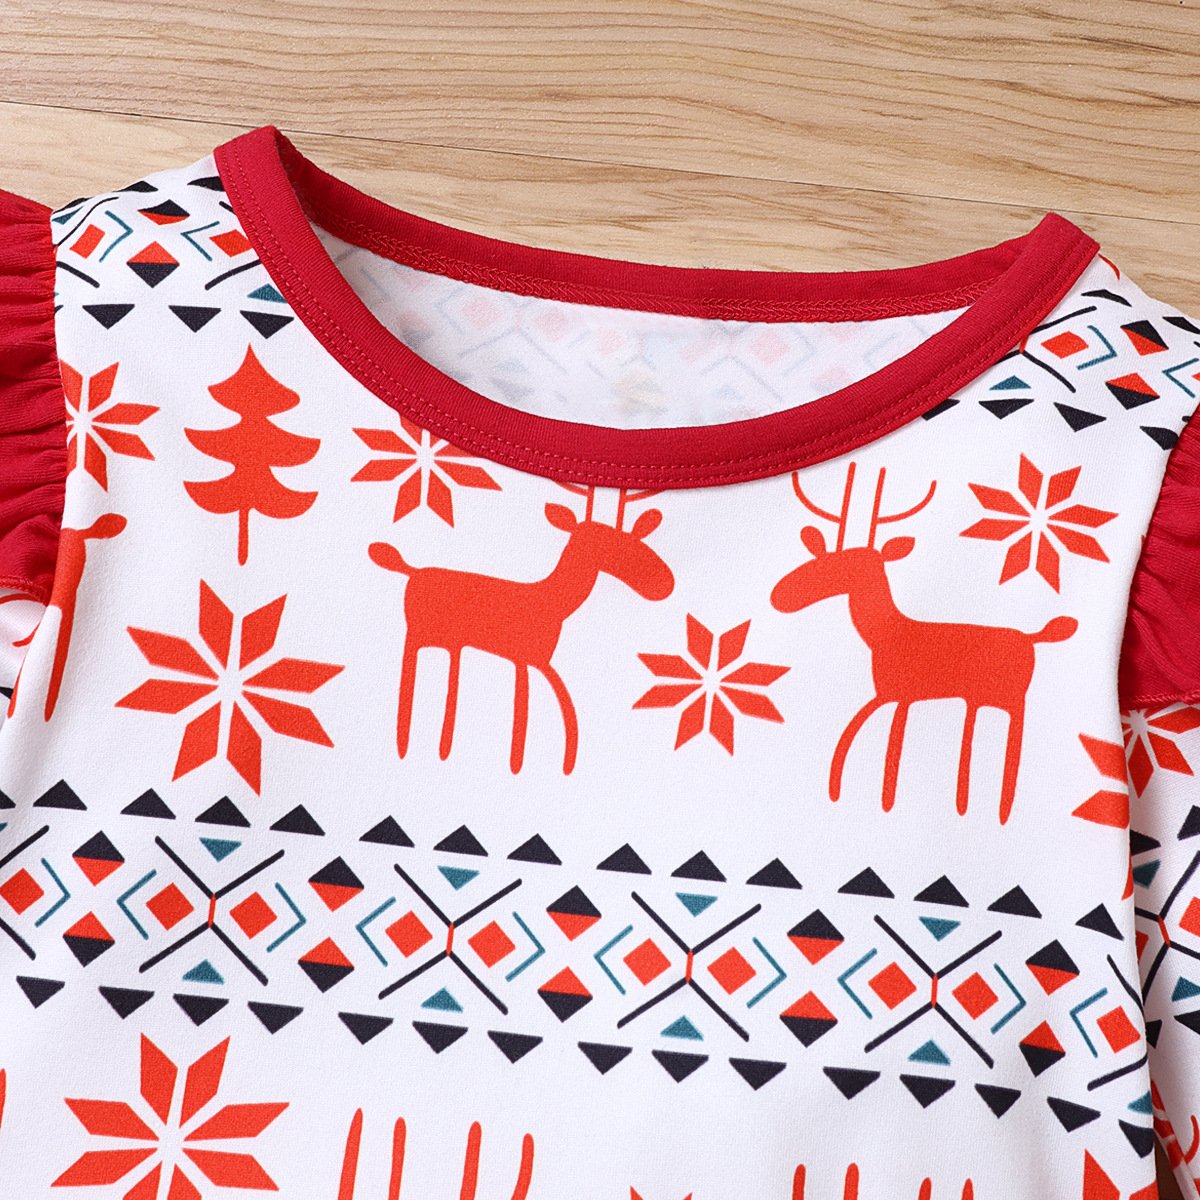 Girls Long Sleeve Animal Printed Dress wholesale childrens clothing